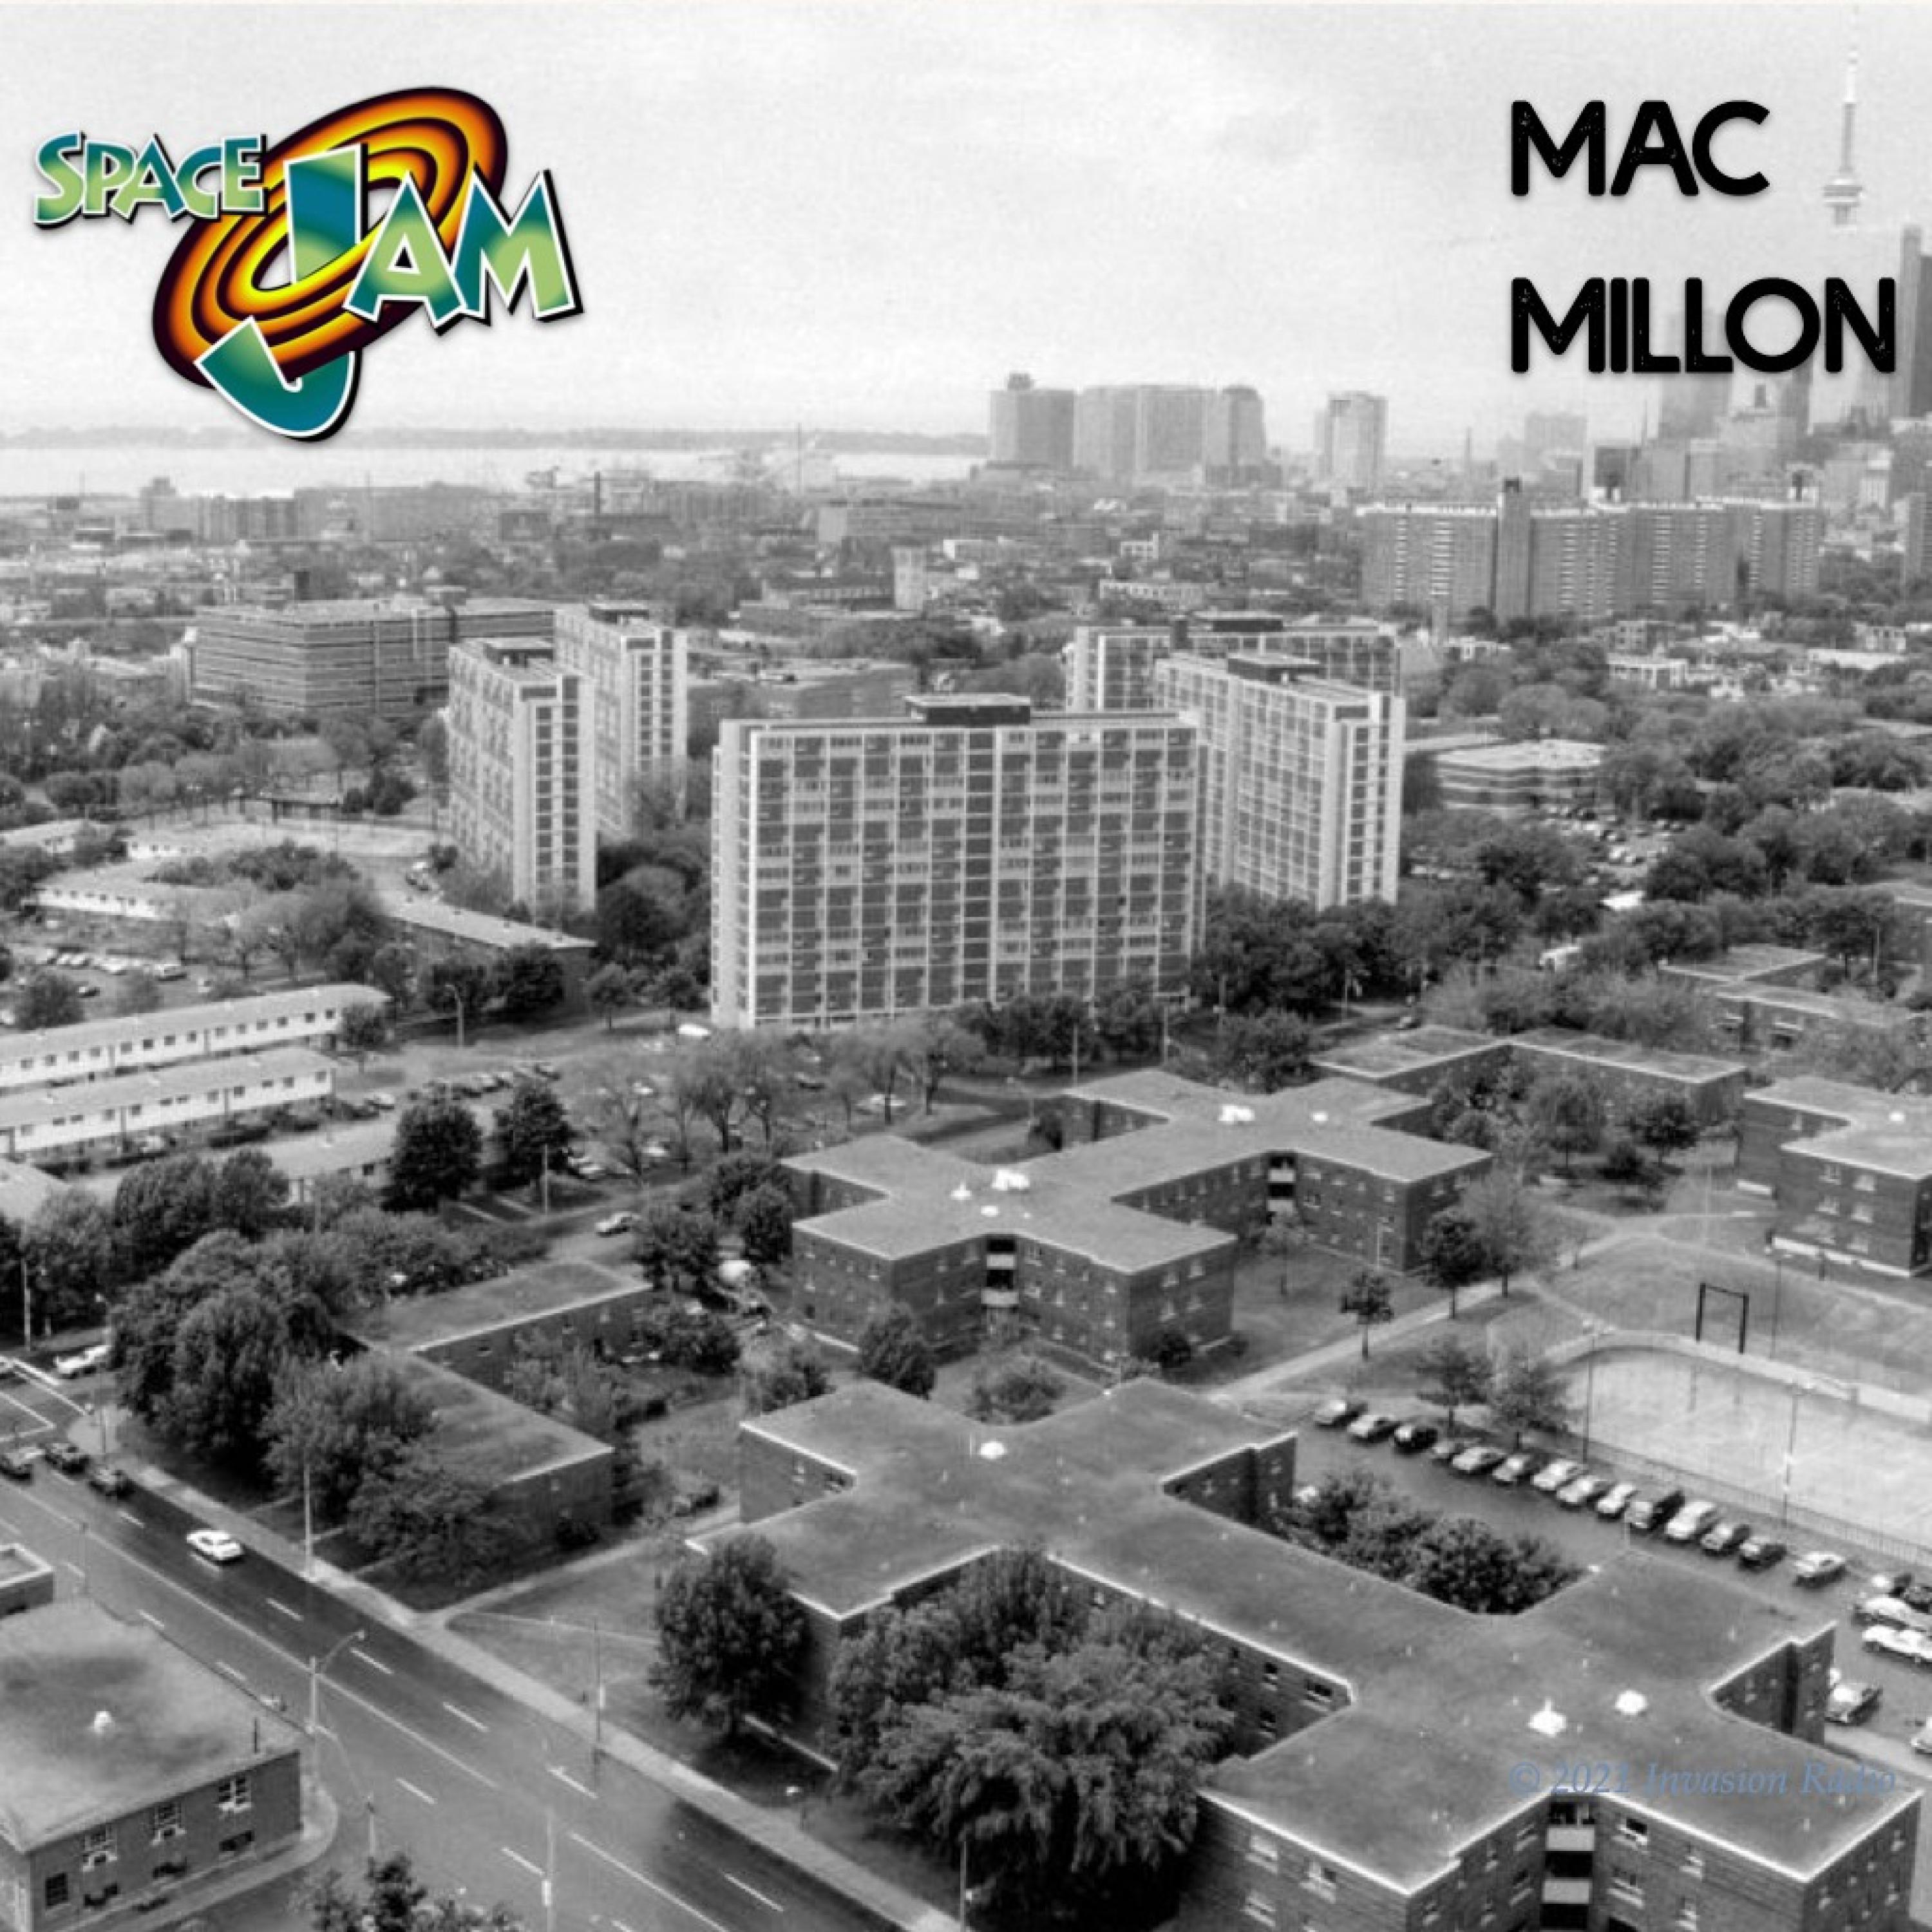 Mac Millon - Space Jam